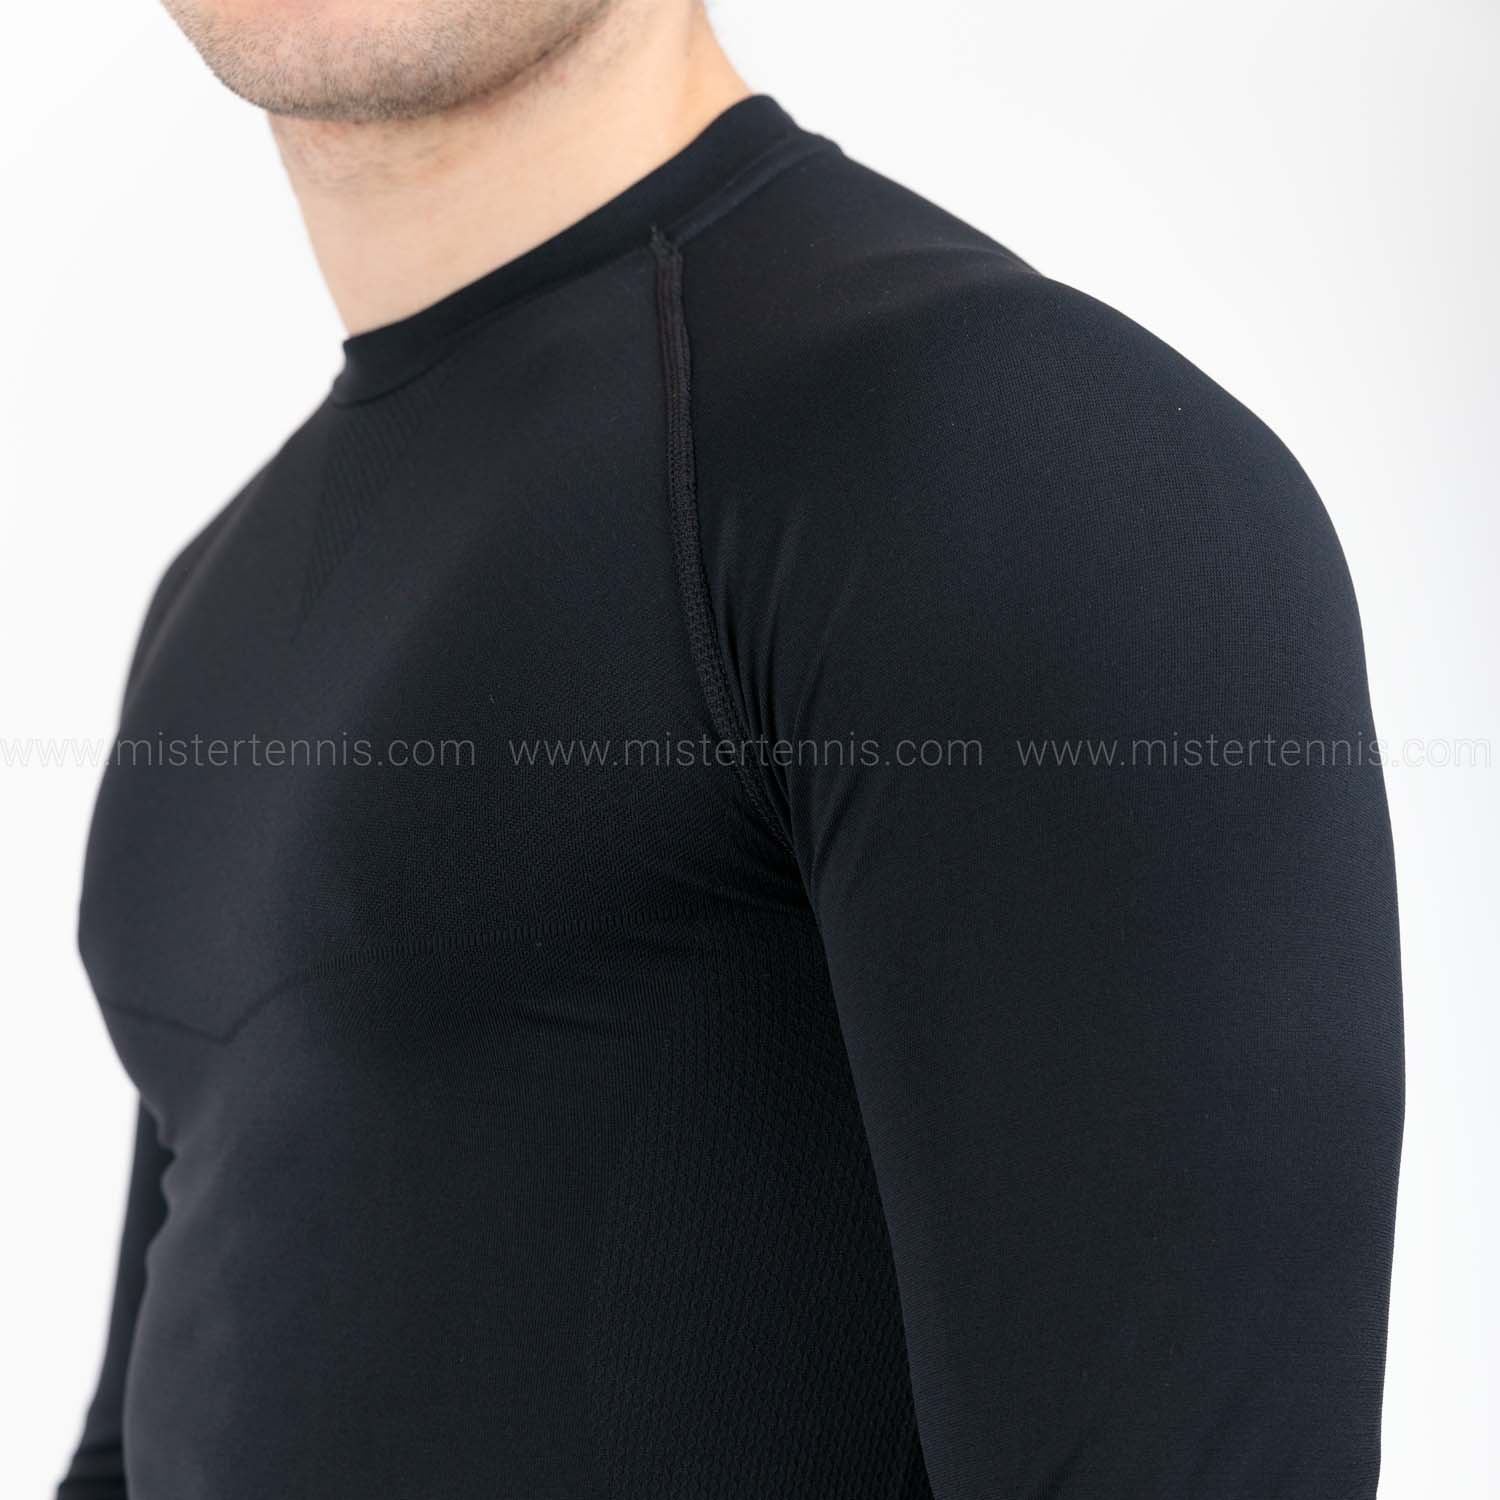 Head Flex Seamless Shirt - Black